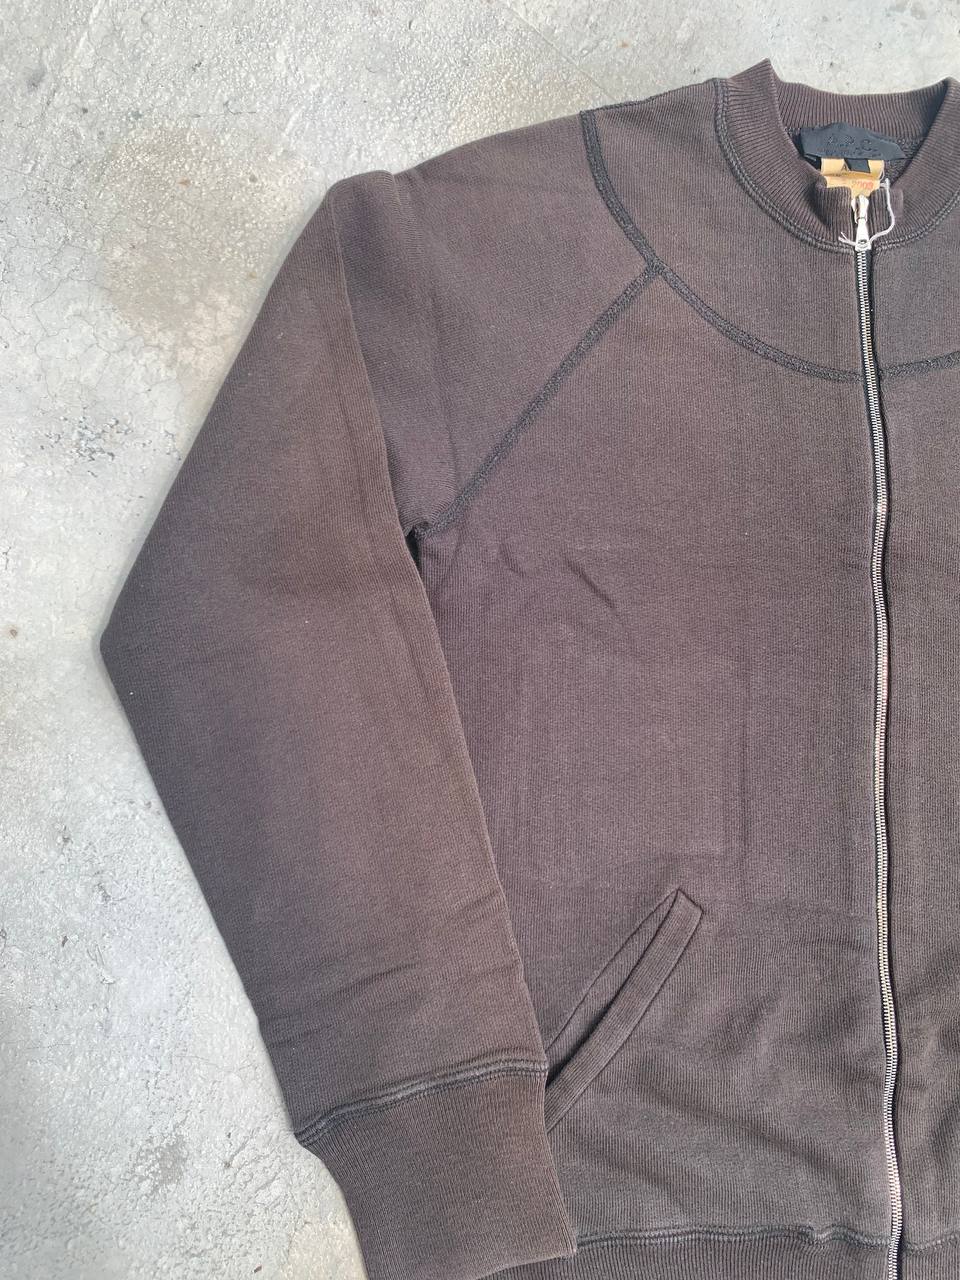 APC ETE 2003 Faded Black Zip Up Sweater - 4